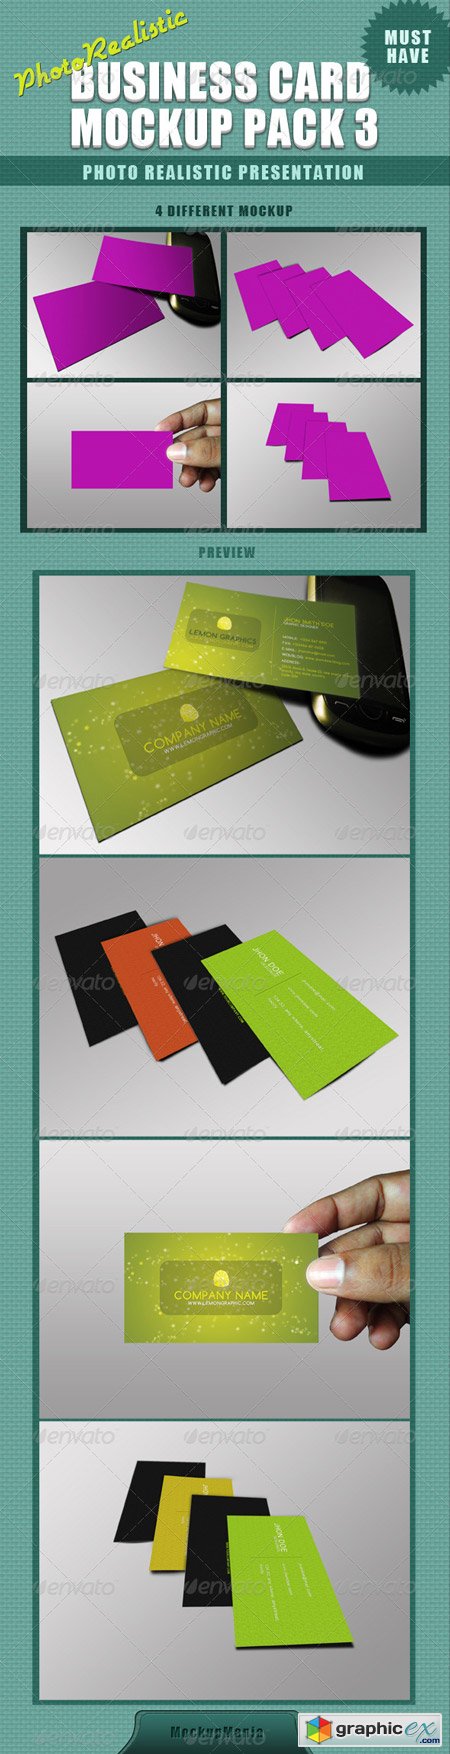 Photorealistic Business Card Mockup 3